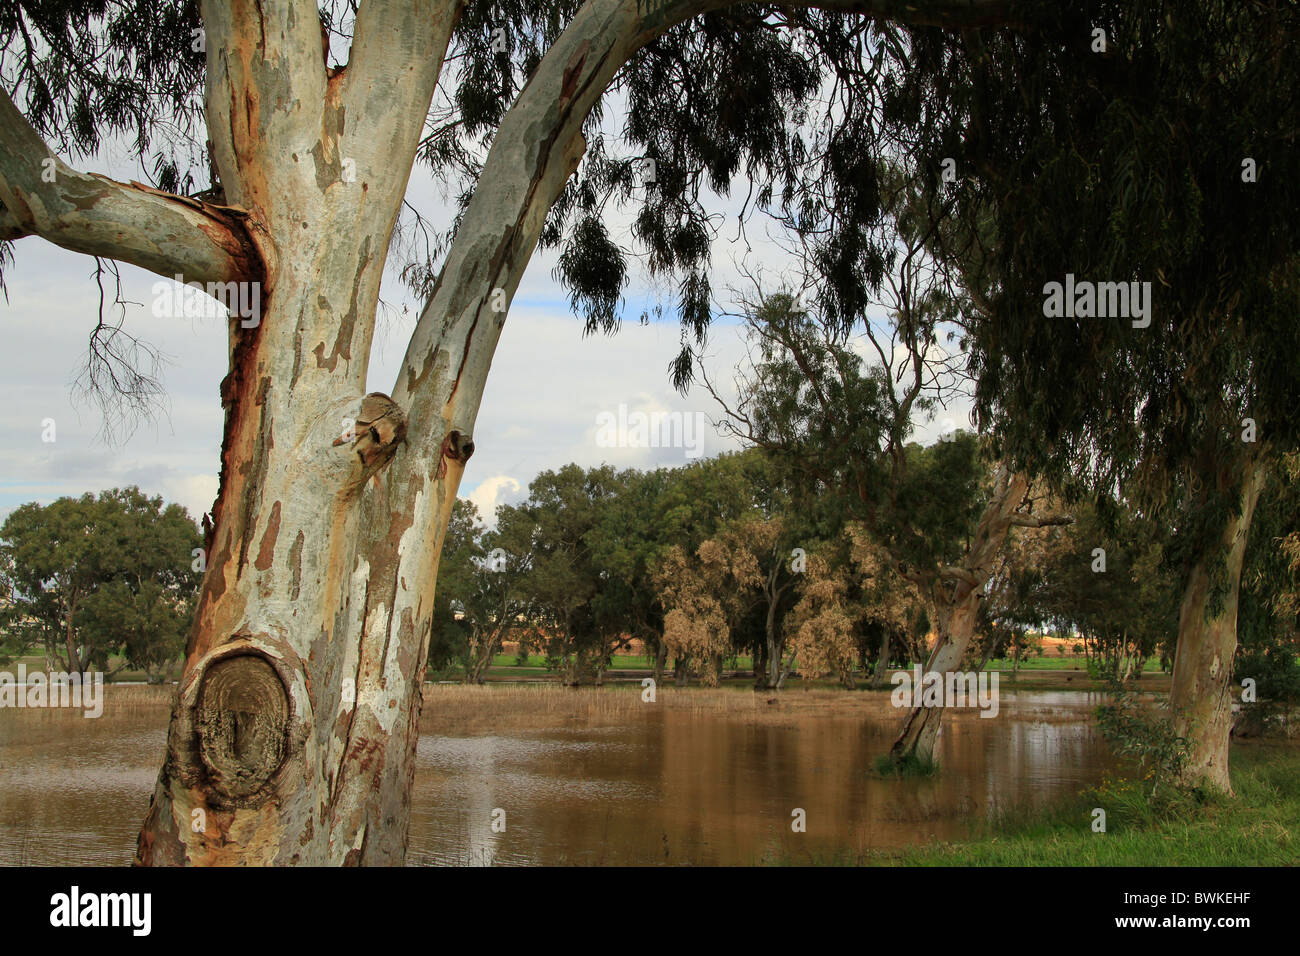 Israel, Sharon region, the rain pool in Netanya Stock Photo